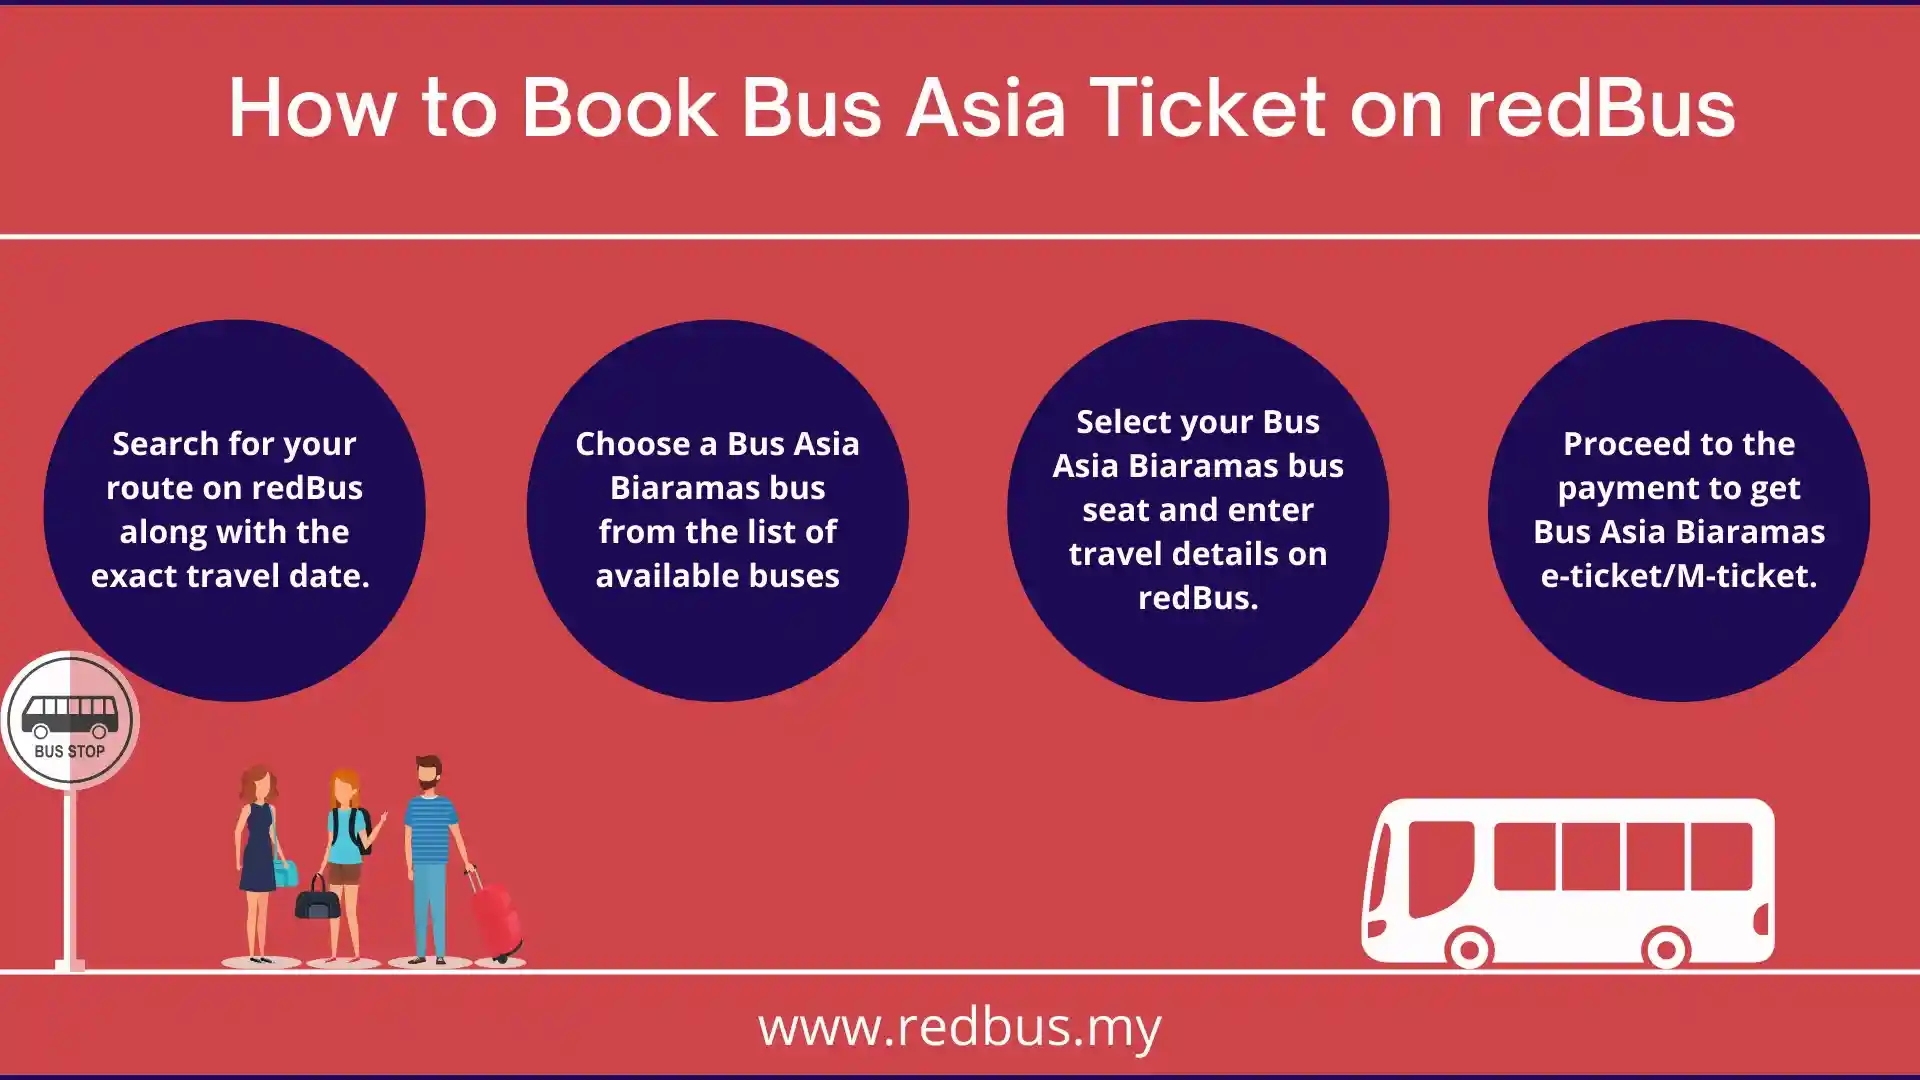 bus Asia Biaramas tickets